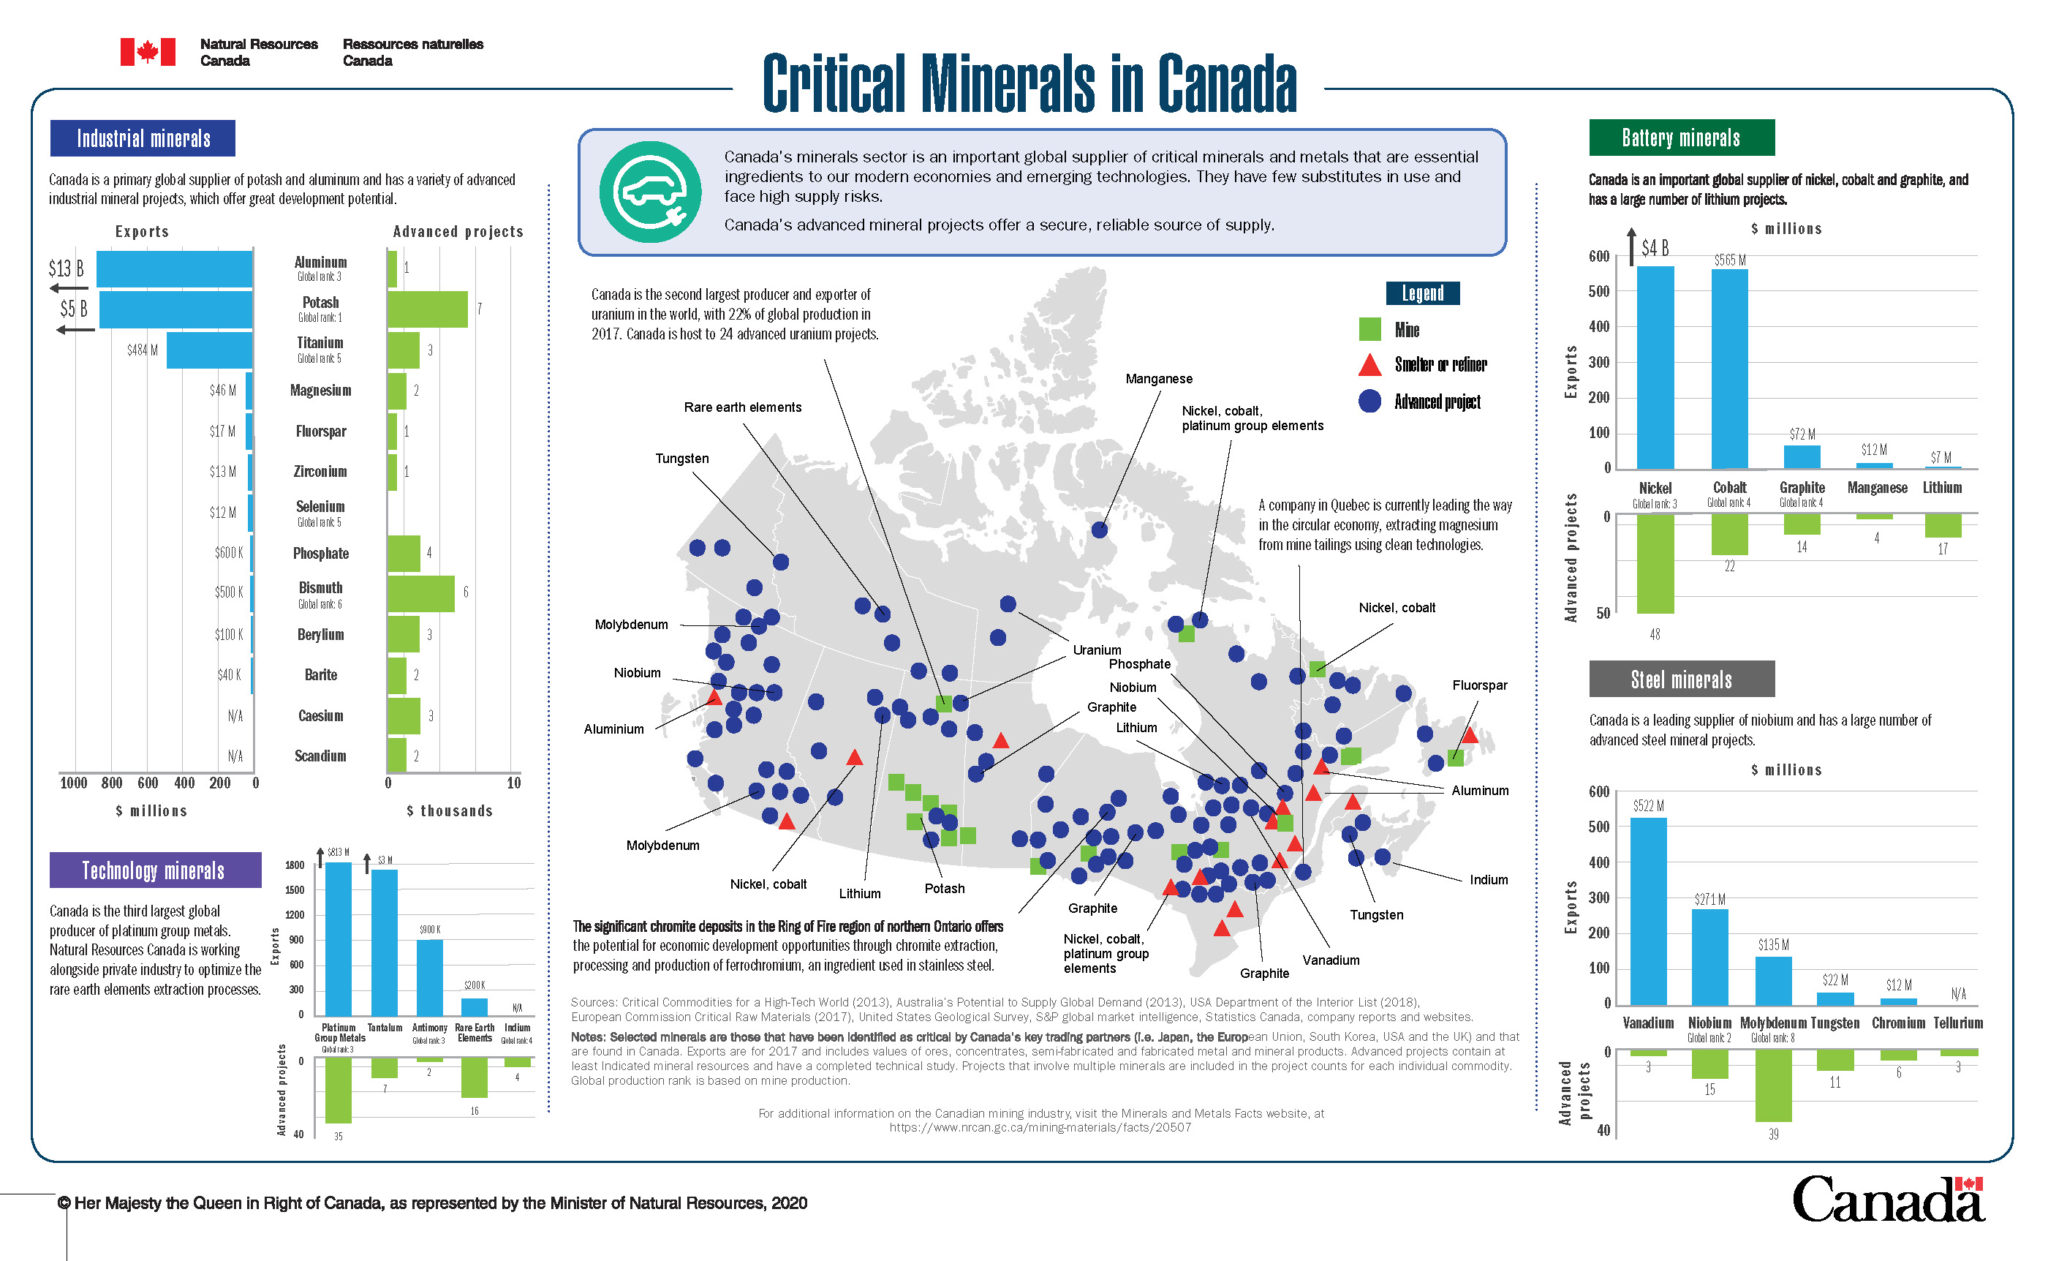 U.S.Canada Collaboration on Critical Minerals Connect2Canada